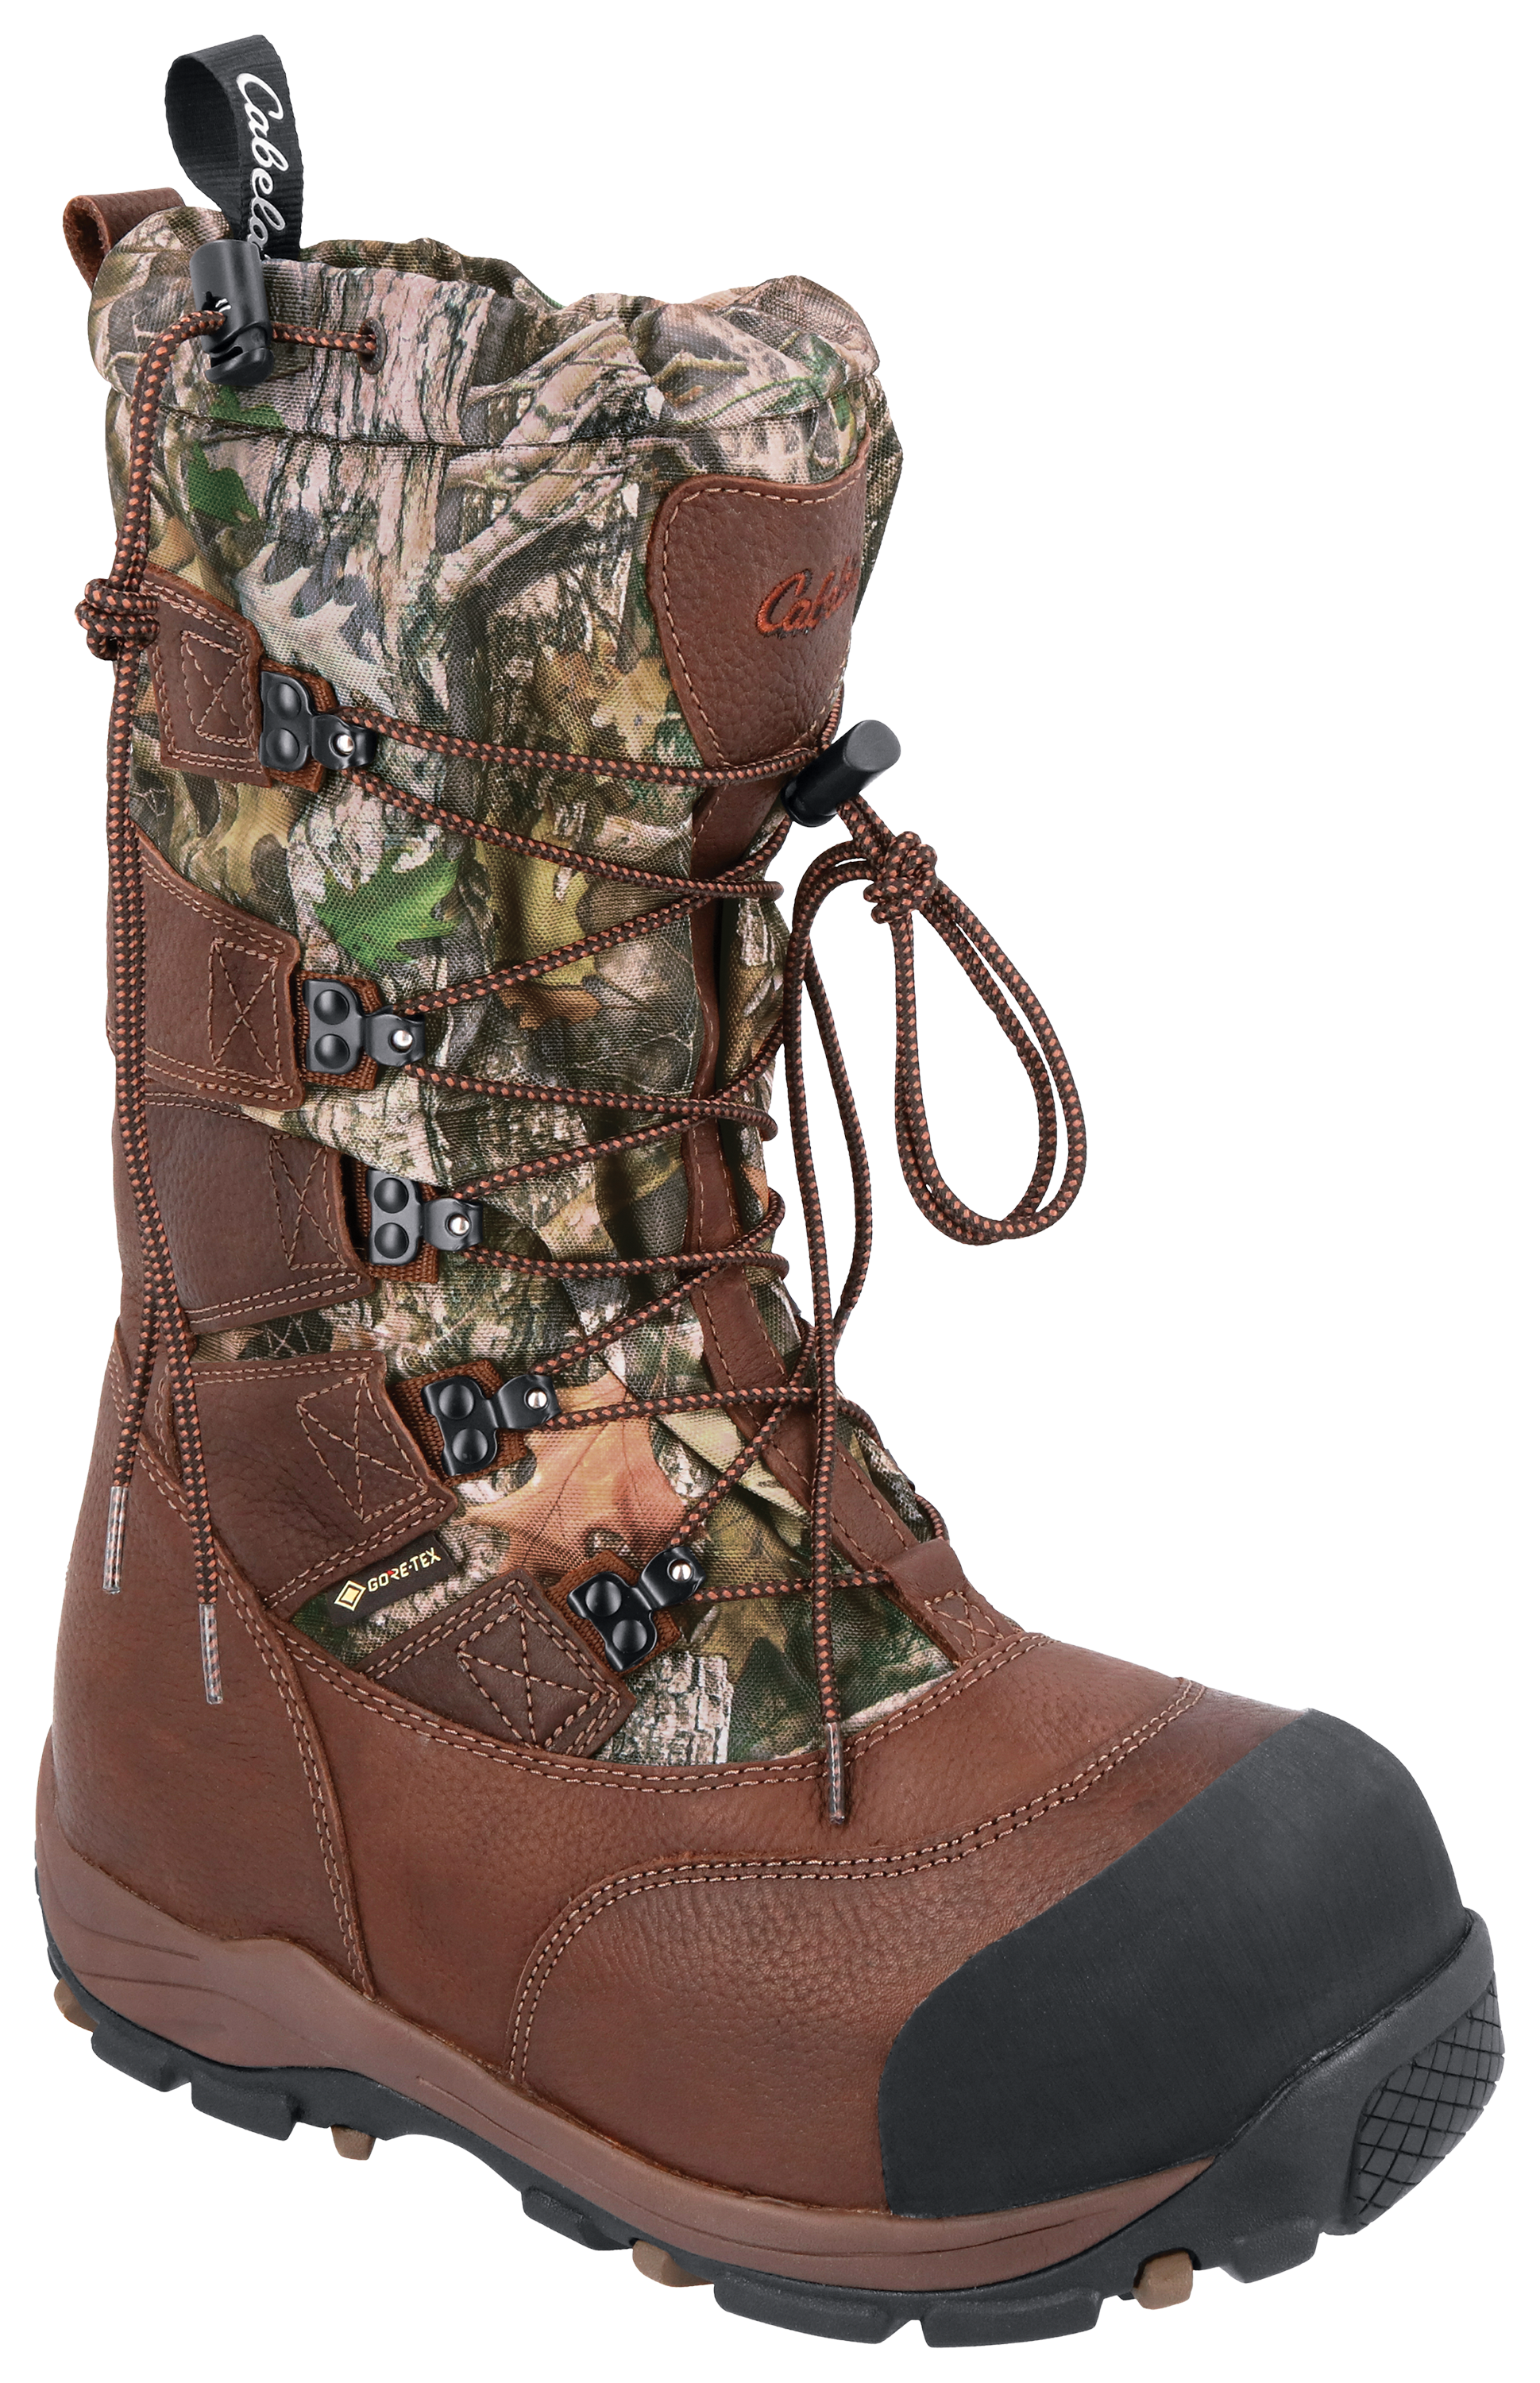 Cabela's Saskatchewan GORE-TEX Insulated Hunting Boots for Men - Dark Brown/TrueTimber Kanati - 9M